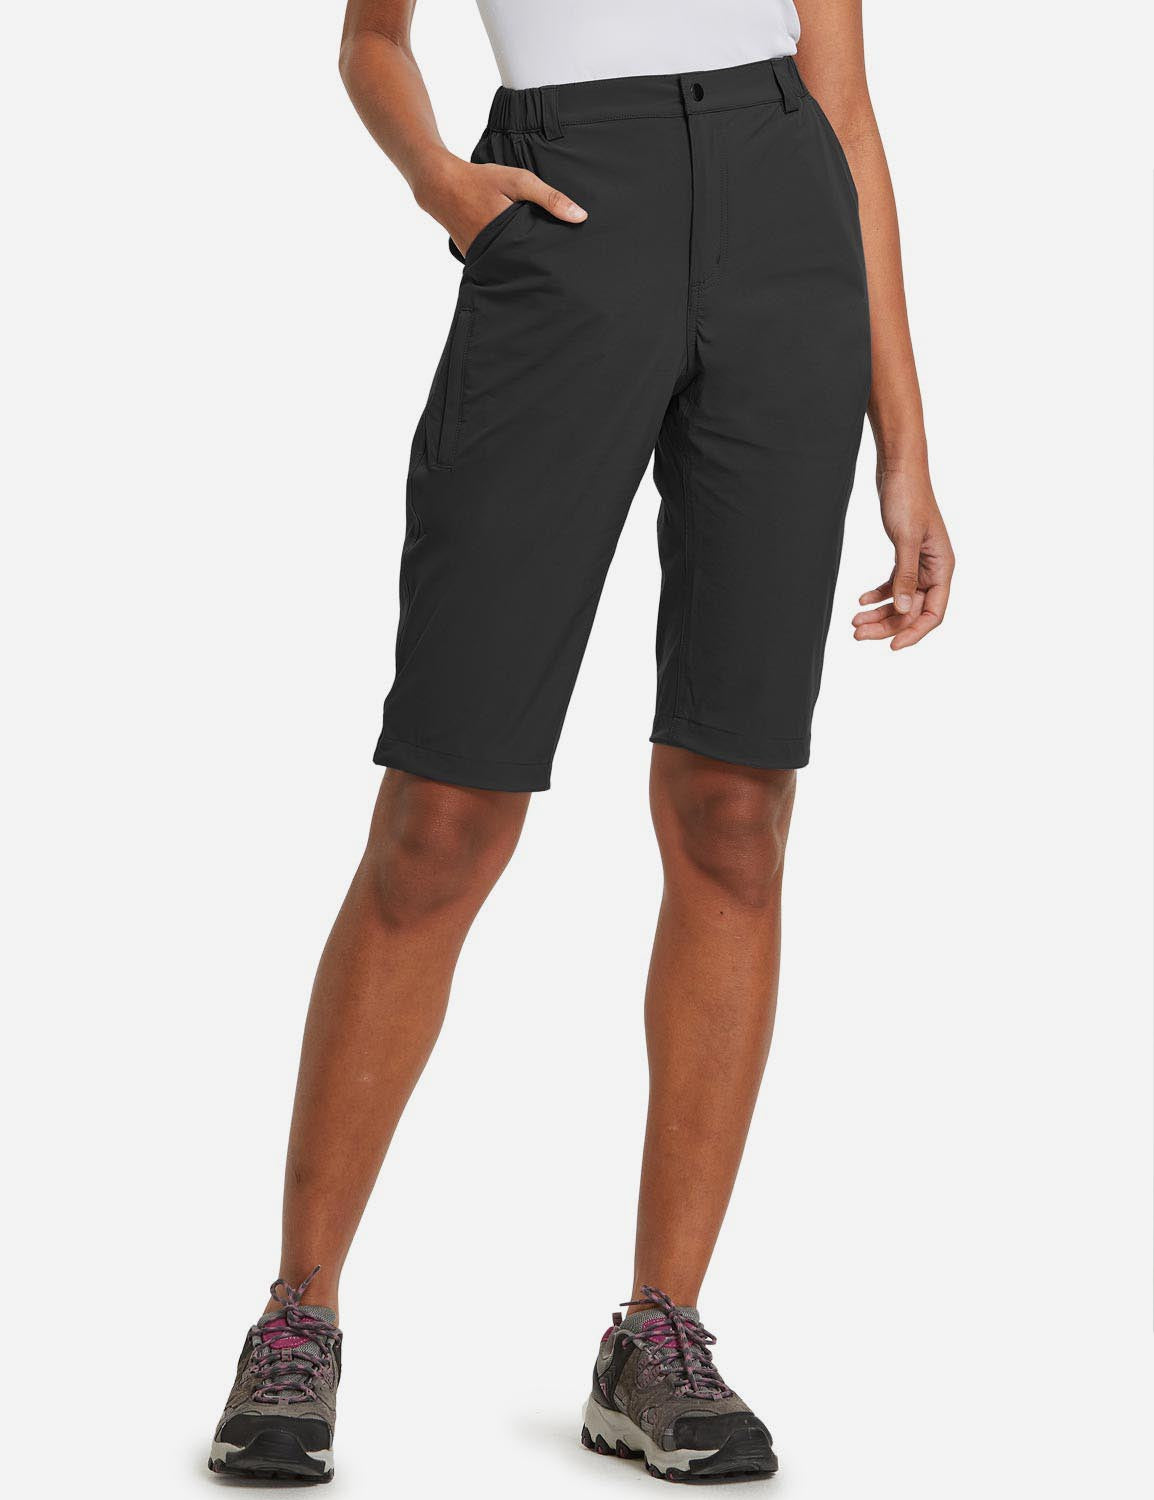 Baleaf Women's UPF50+ Quick Dry Knee High Outdoor Shorts – Baleaf